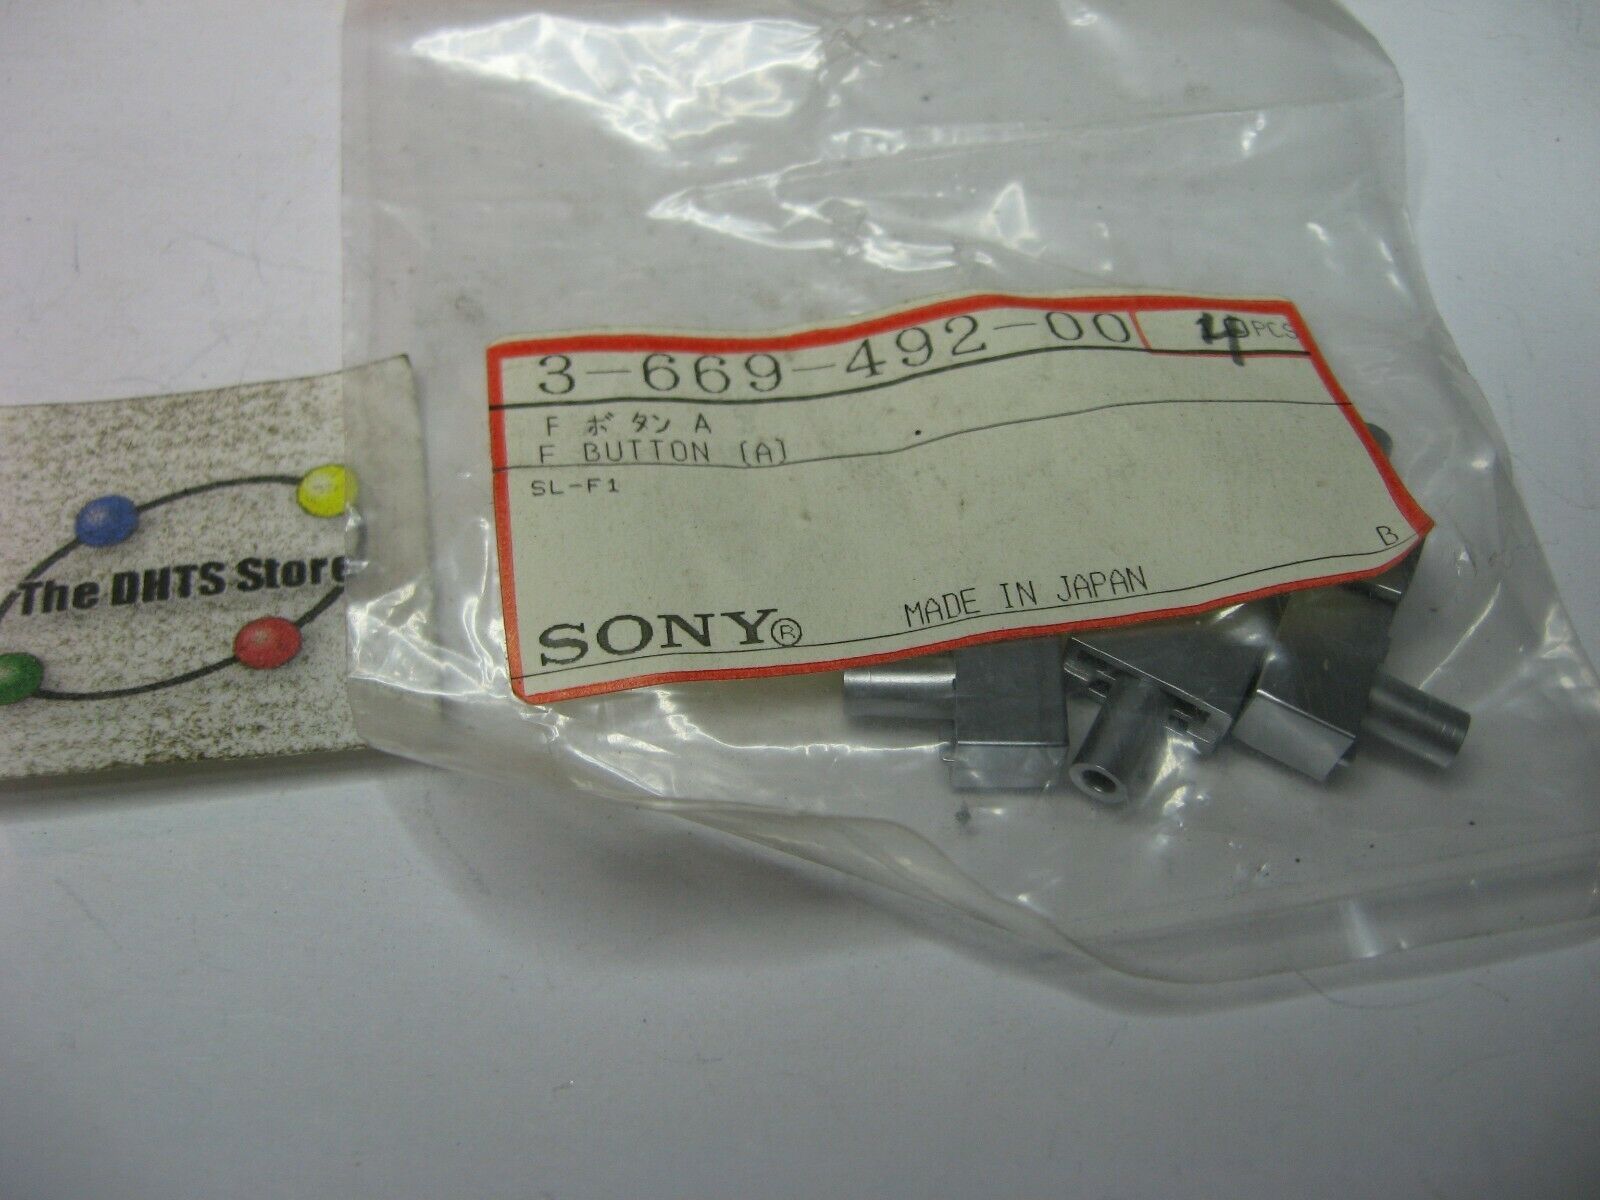 Push-Button Cap Plastic Grey/Silver Sony 3-669-492-00 - NOS Qty 4 - $5.69